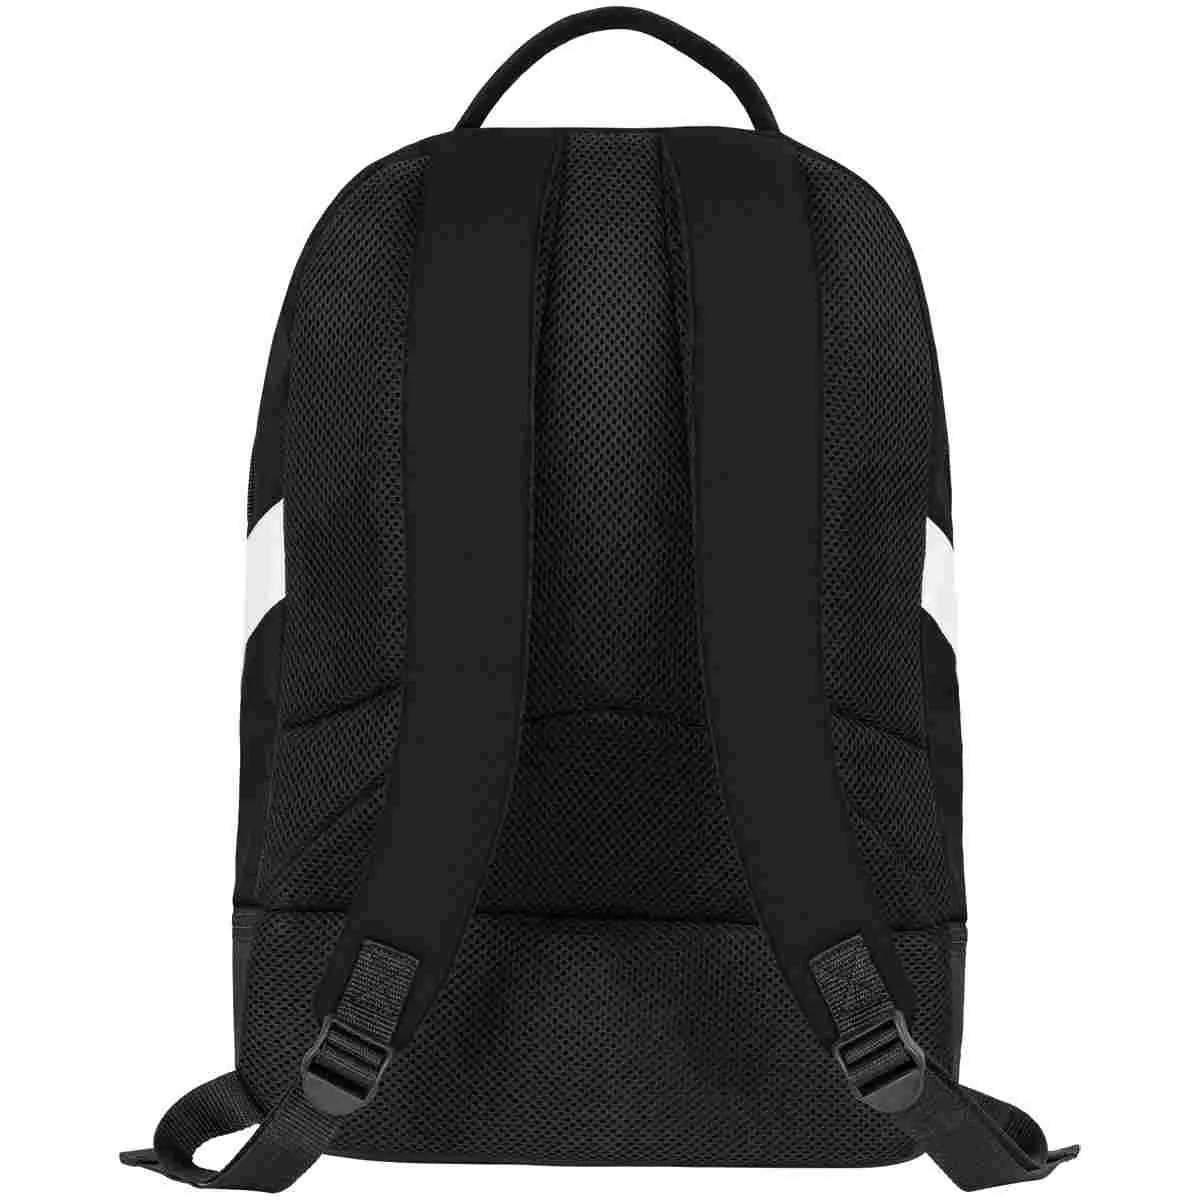 Jako backpack Iconic black